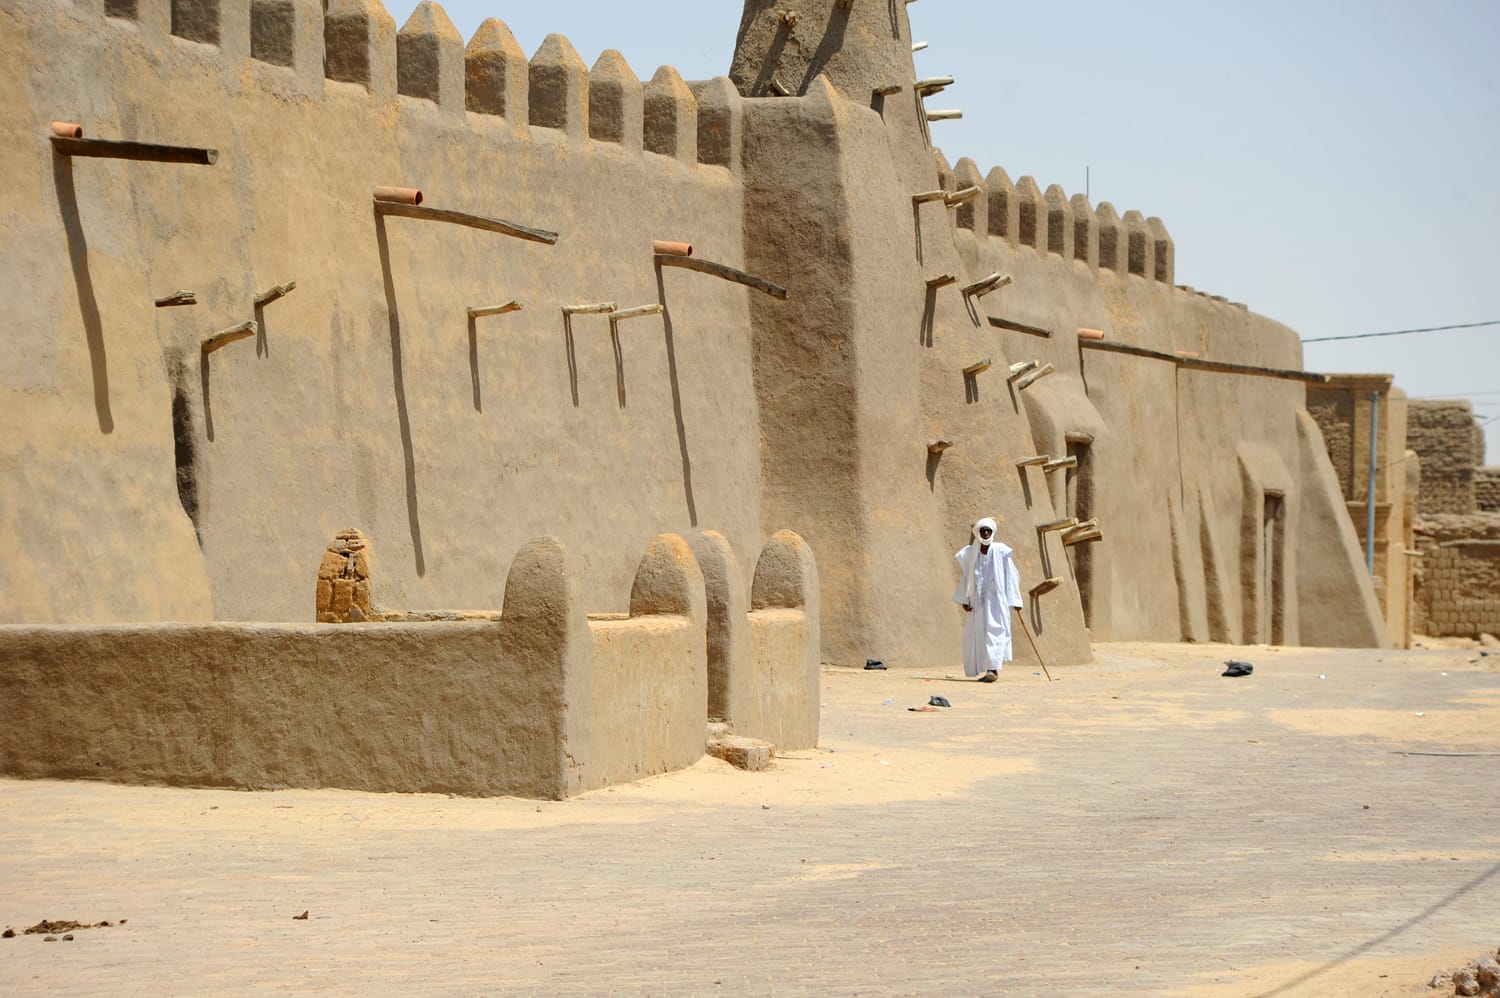 Timbuktu, Mali, Africa